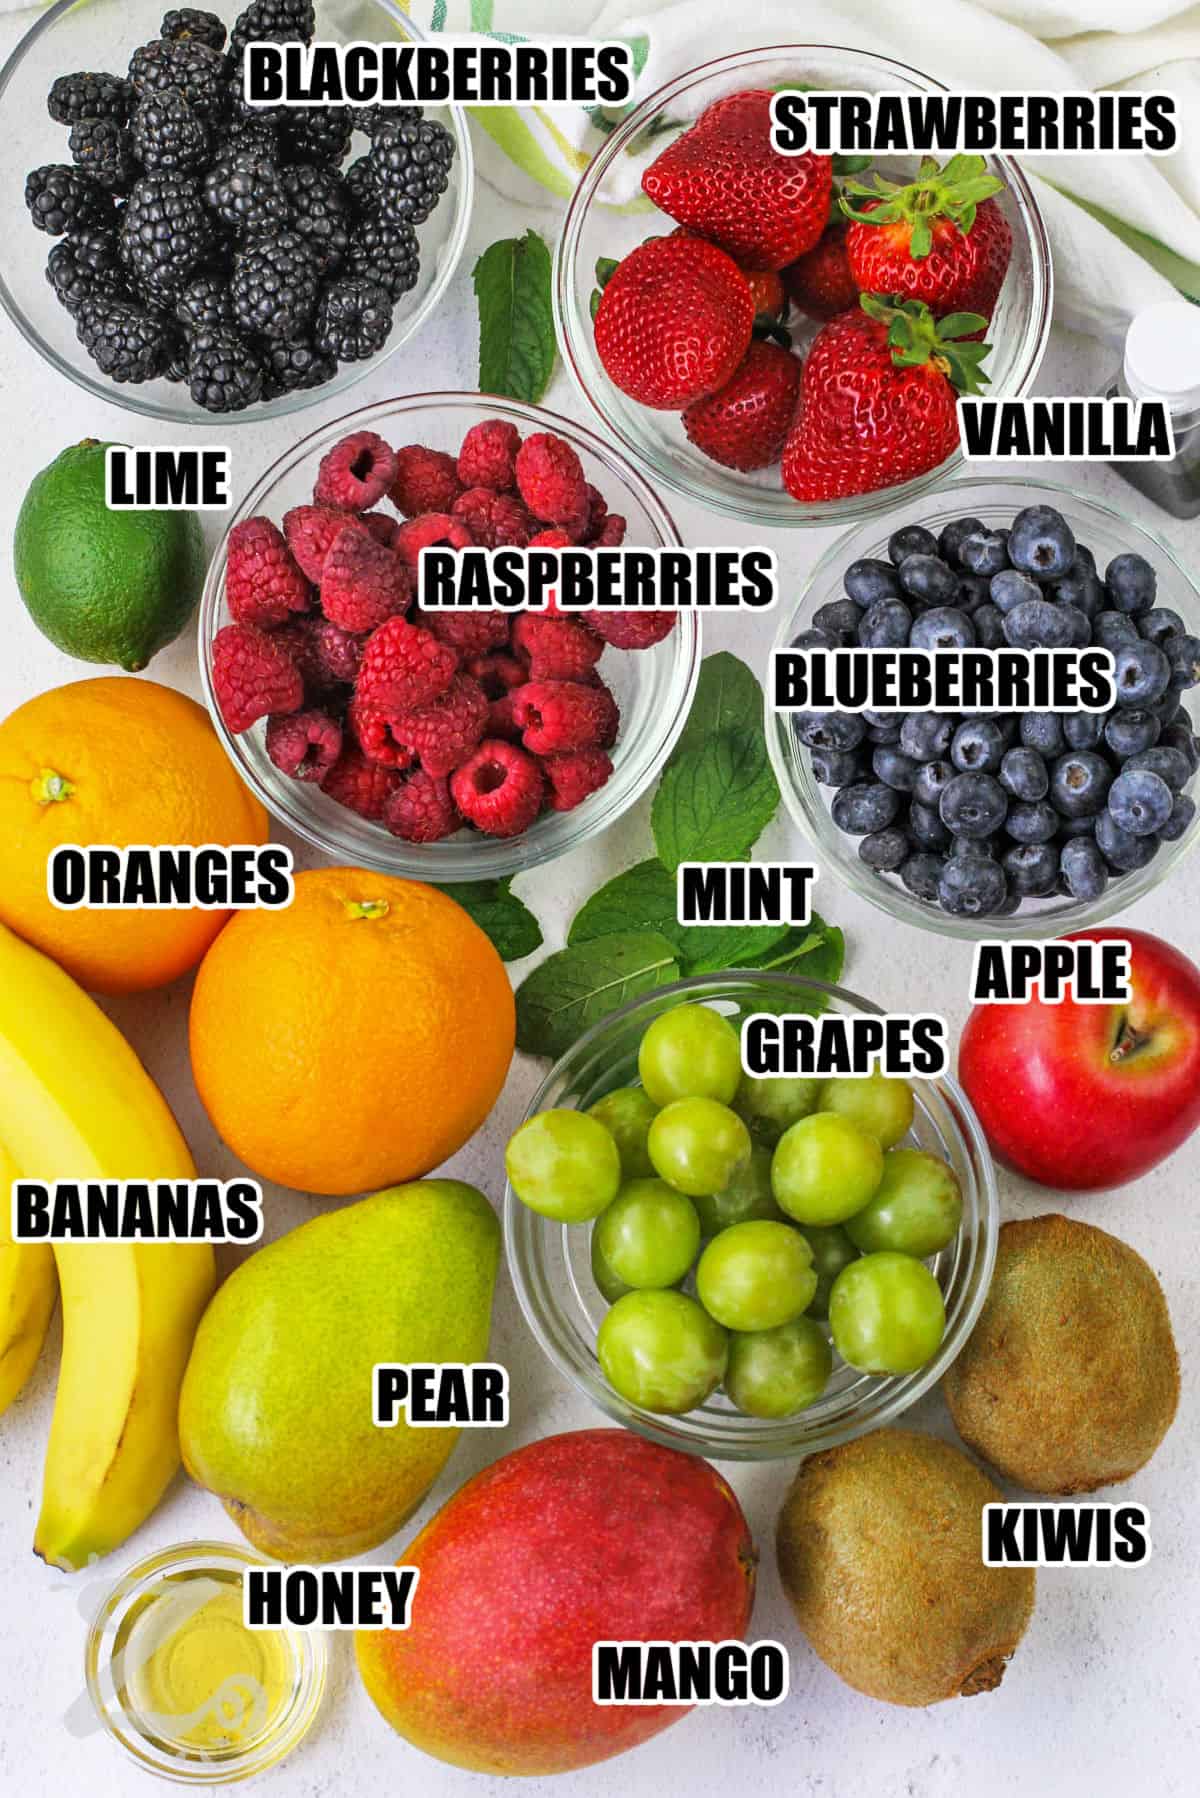 blackberries, strawberries, vanilla, blueberries, apple, grapes, mint, kiwis, mango, honey, pear, bananas, oranges, lime and raspberries assembled to make a recipe for fruit salad.